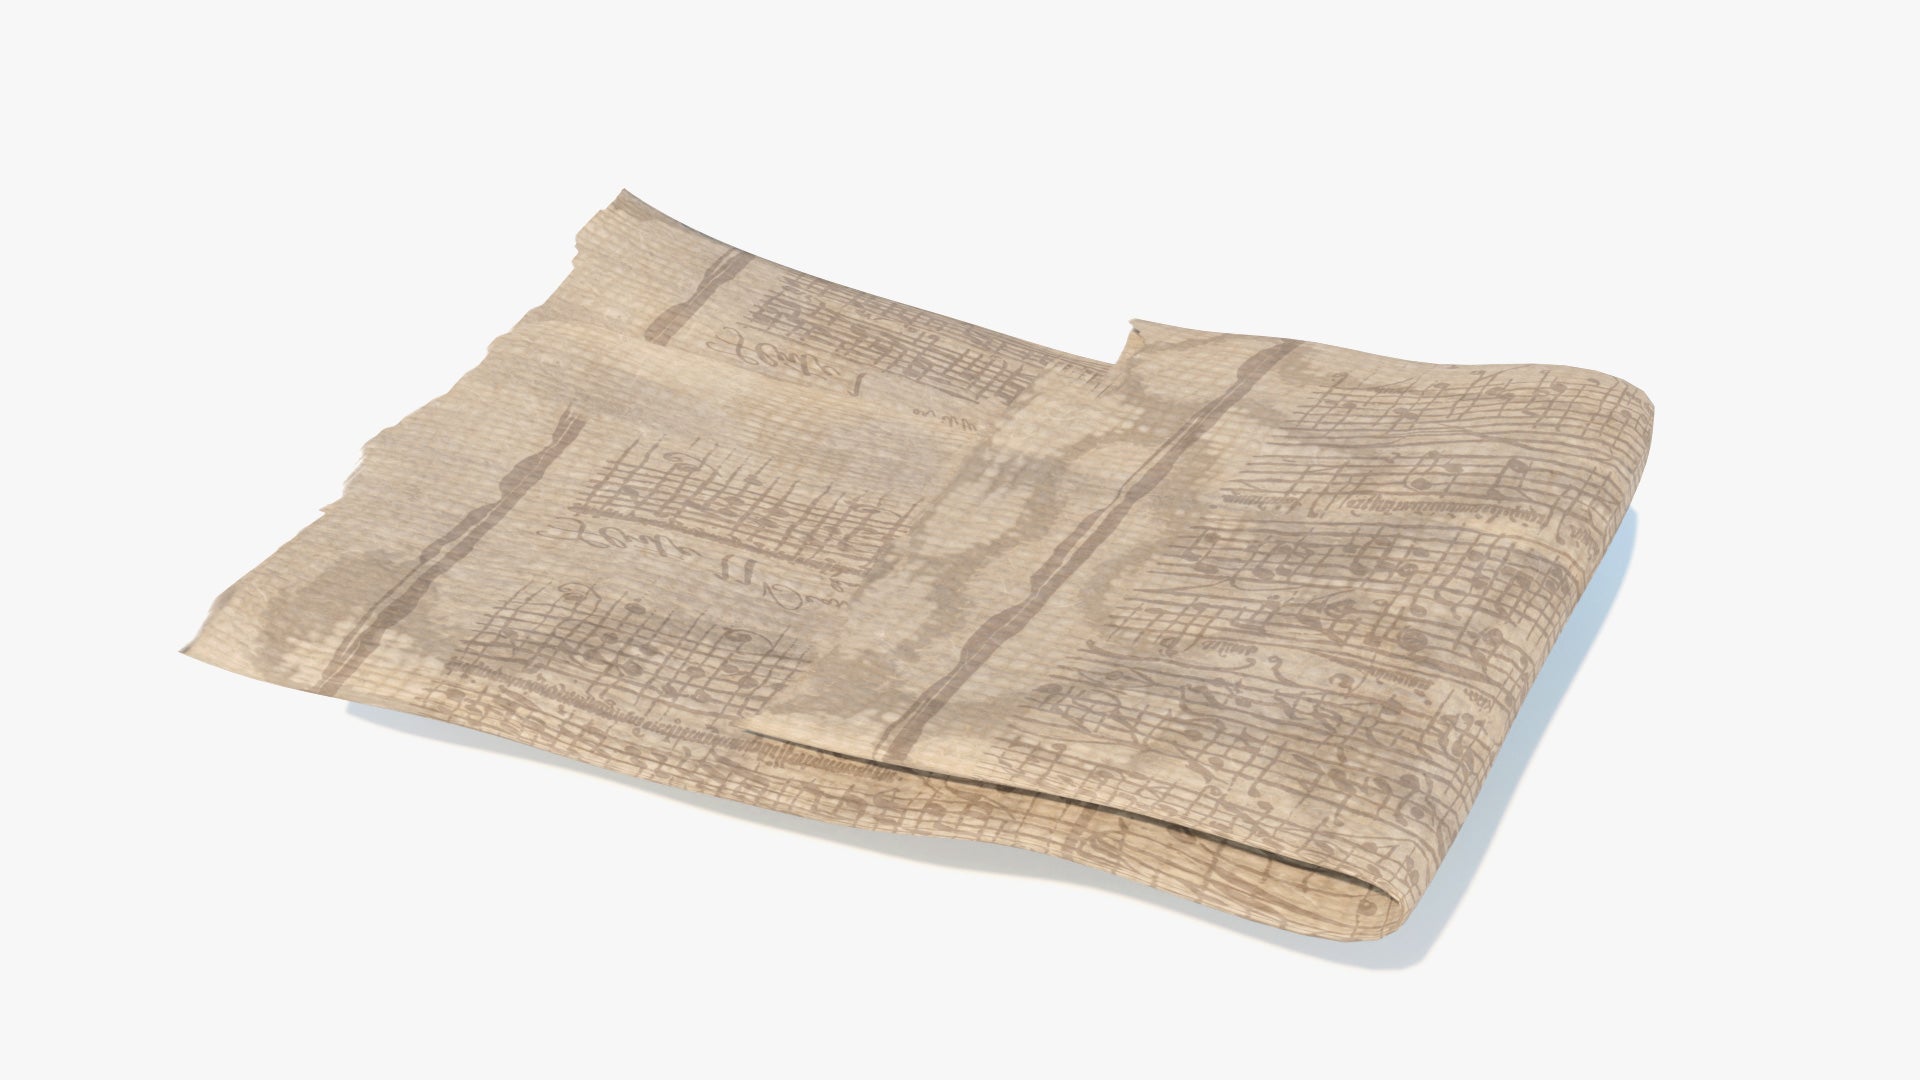 3D model of a folded parchment